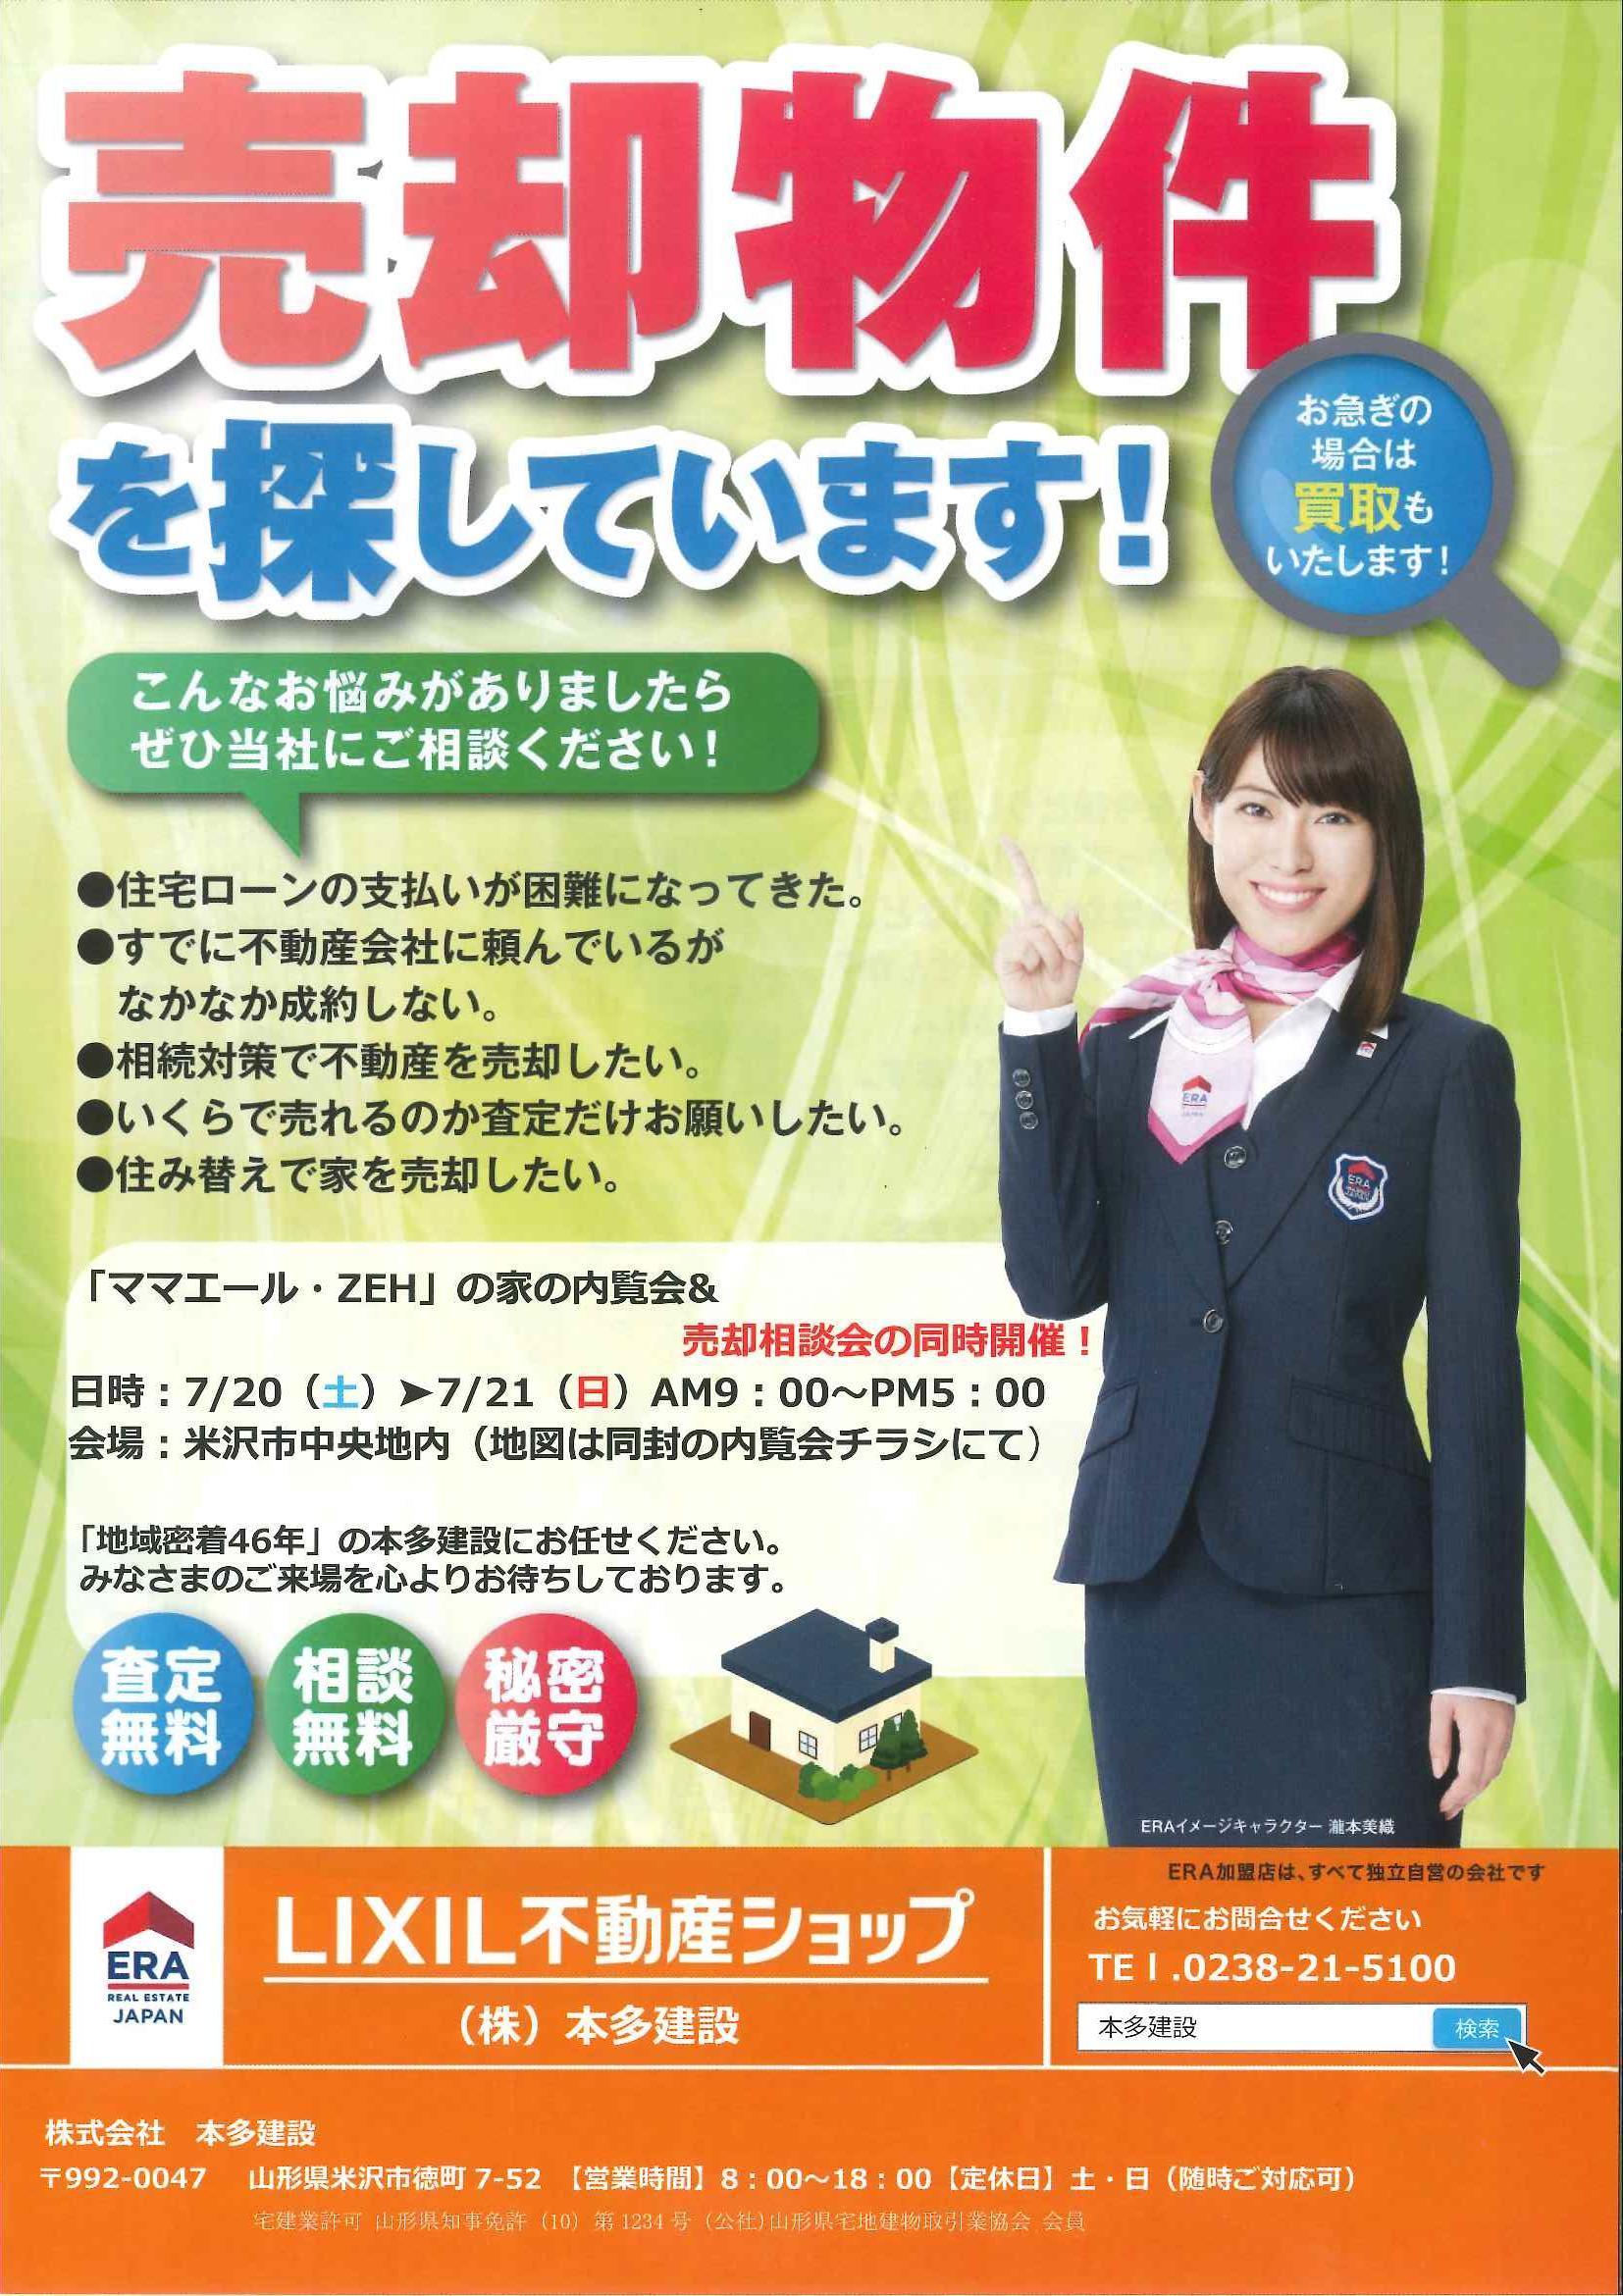 https://www.lixil-reformshop.jp/shop/SP00000487/photos/20190712142930721_0001.jpg